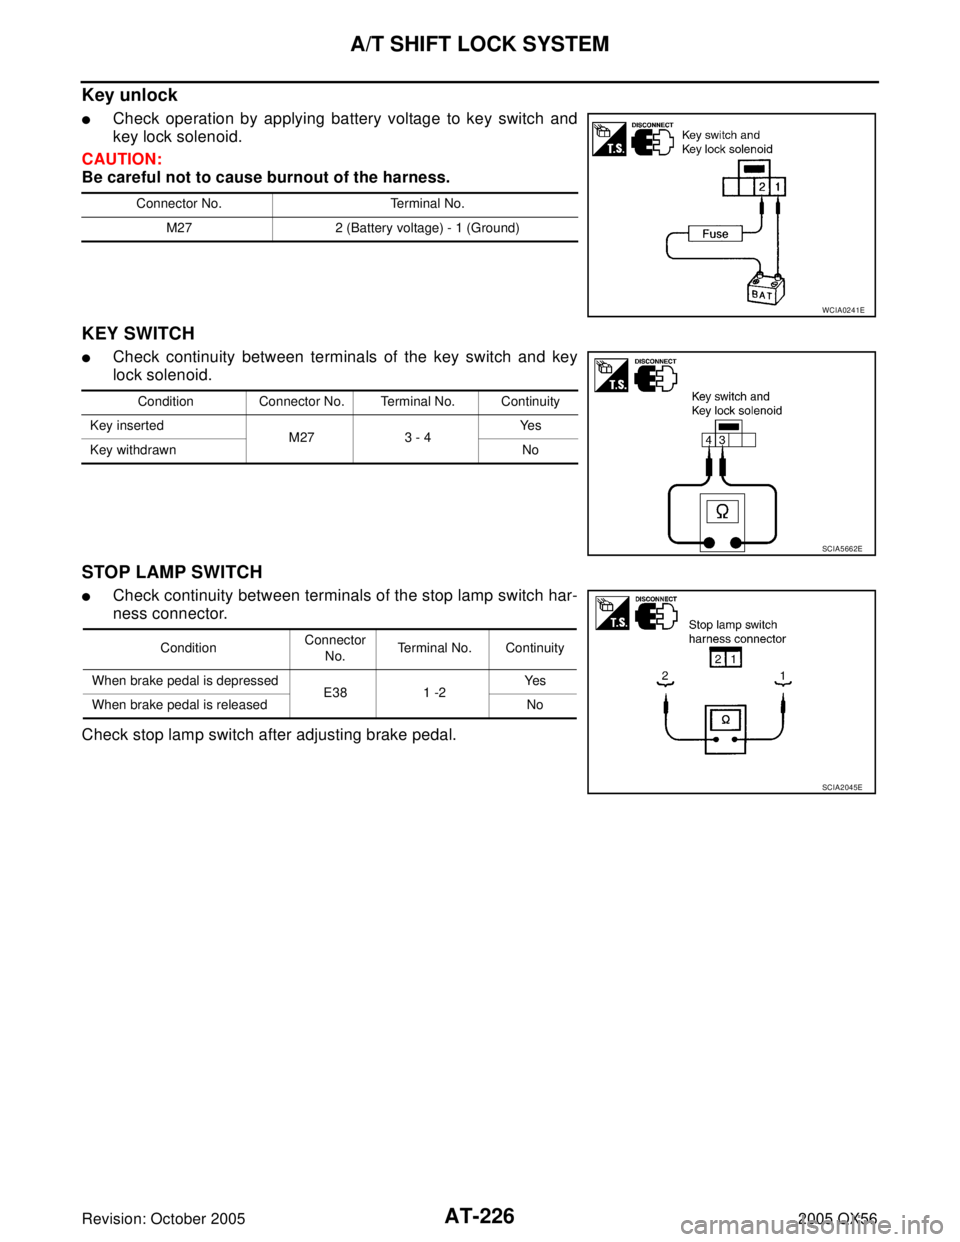 INFINITI QX4 2005  Factory Service Manual AT-226
A/T SHIFT LOCK SYSTEM
Revision: October 20052005 QX56
Key unlock
Check operation by applying battery voltage to key switch and
key lock solenoid.
CAUTION:
Be careful not to cause burnout of th